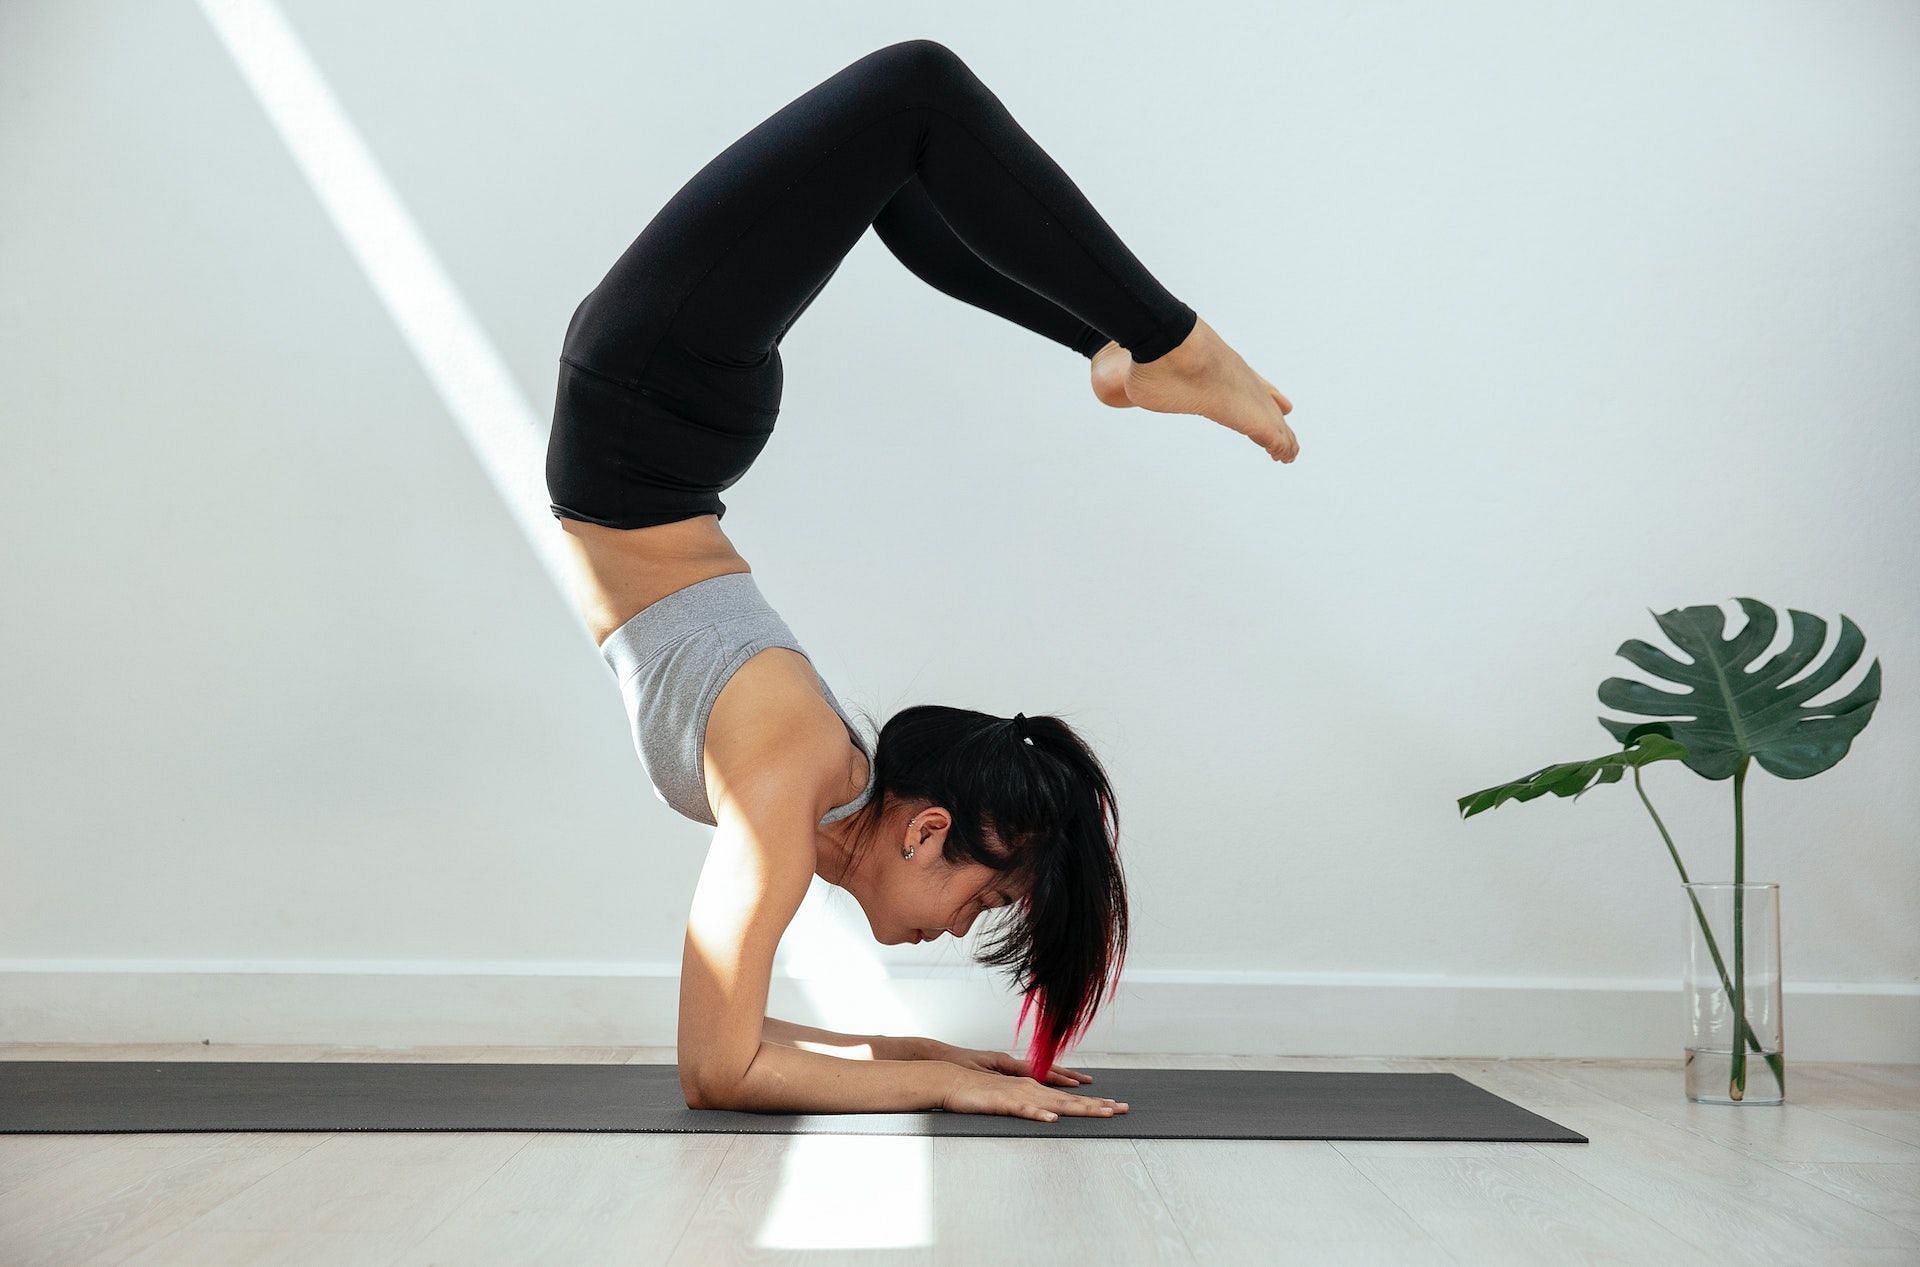 Home | Scorpion pose, Backbend poses, Yoga poses